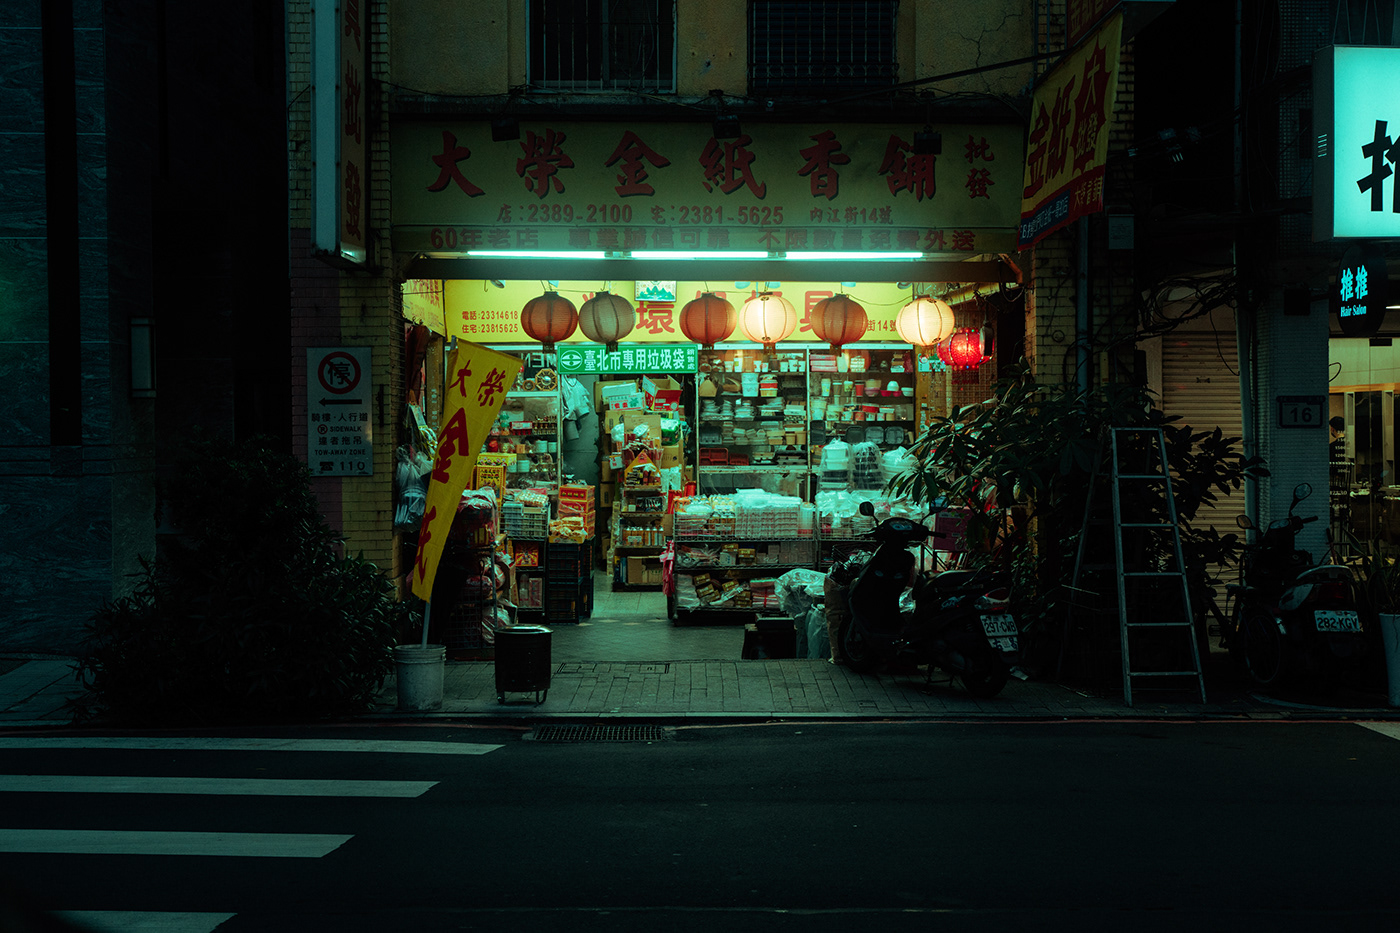 taiwan street photography neon vaporwave glow travel photography city Urban people